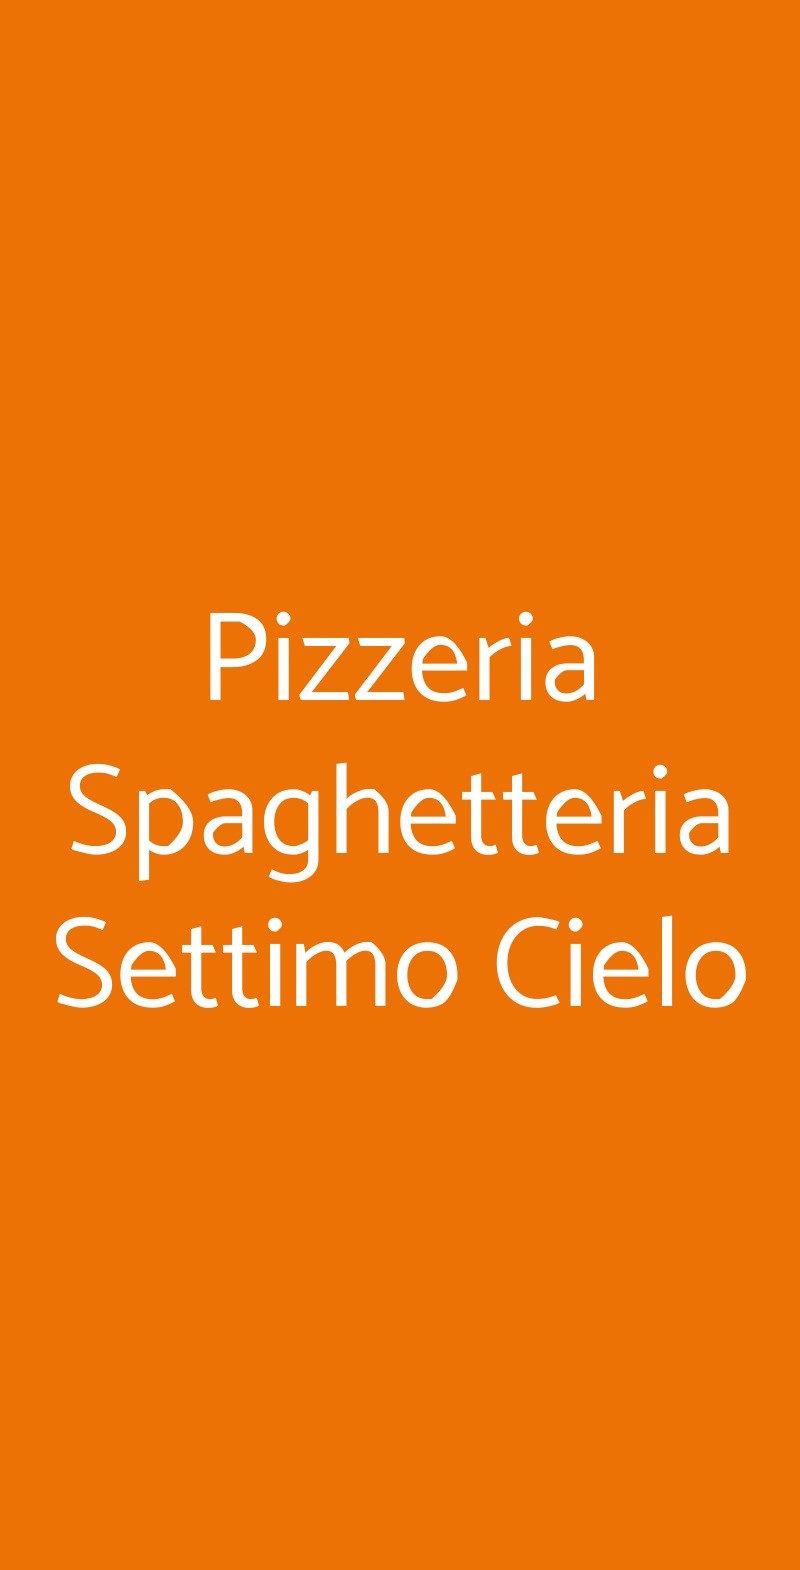 Pizzeria Spaghetteria Settimo Cielo Firenze menù 1 pagina